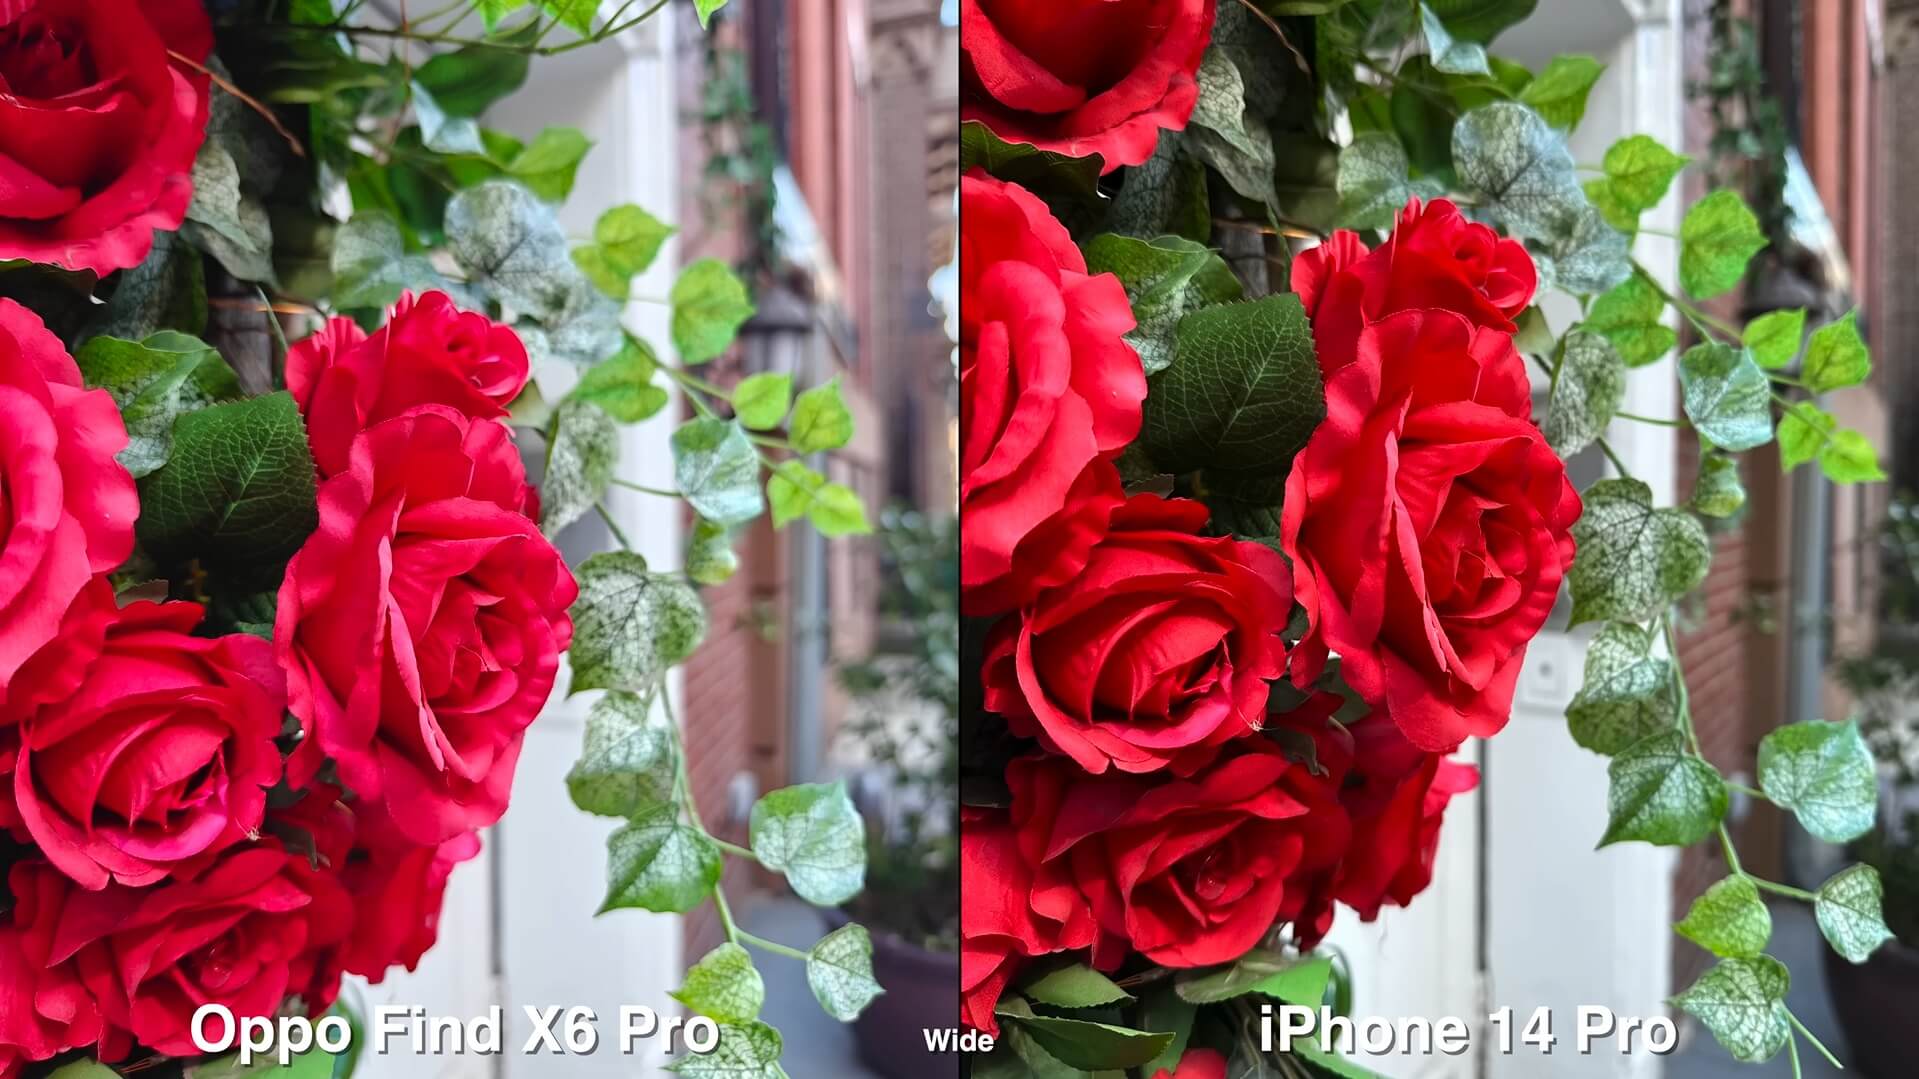 OPPO Find X6 Pro сравнили с iPhone 14 Pro по качеству фото и видео